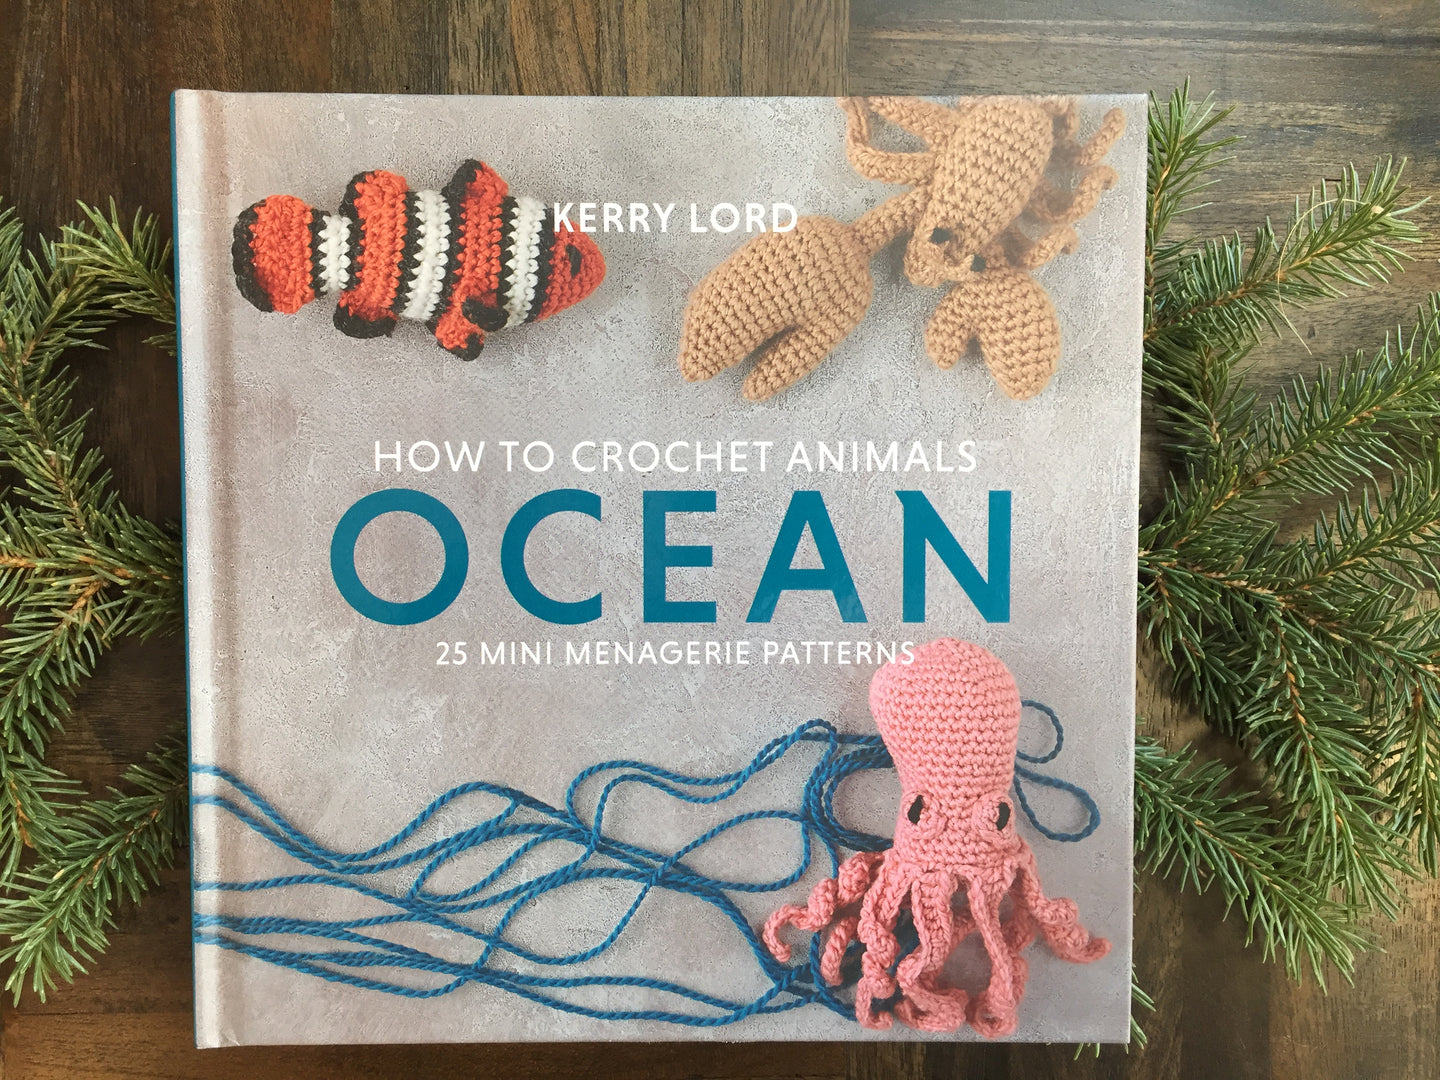 How to Crochet: OCEAN Mini Menagerie